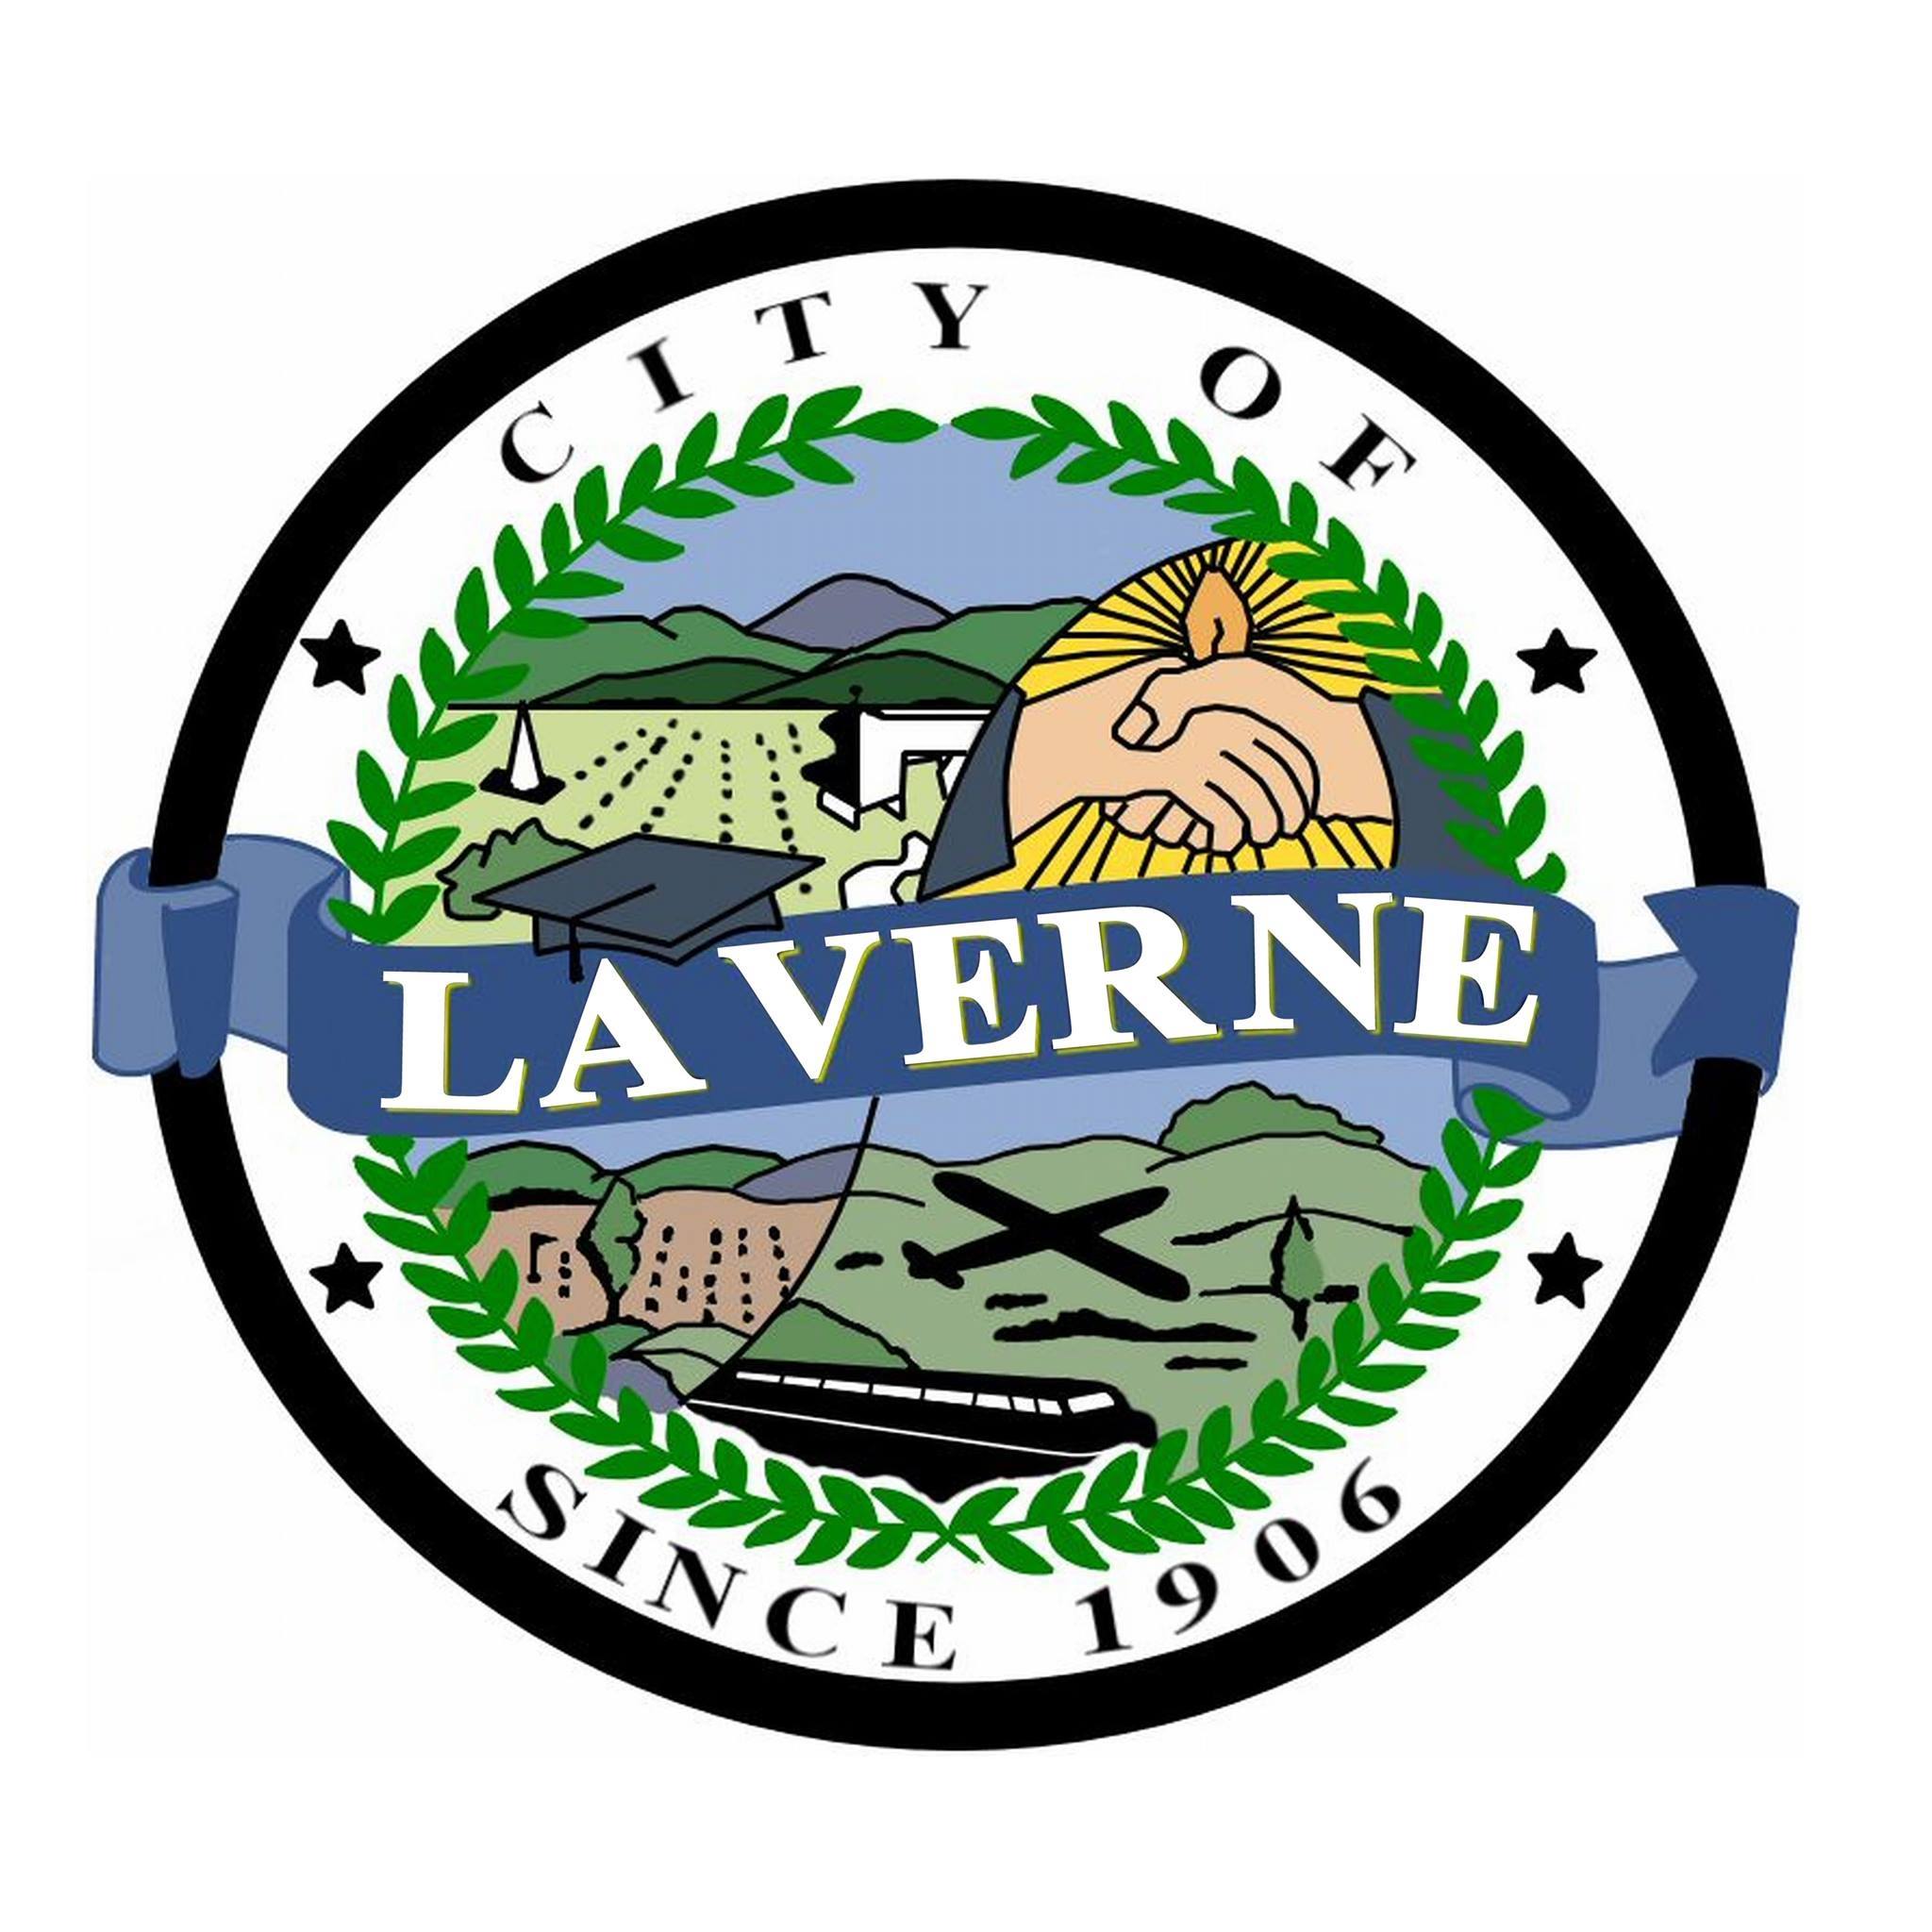 City of La Verne logo